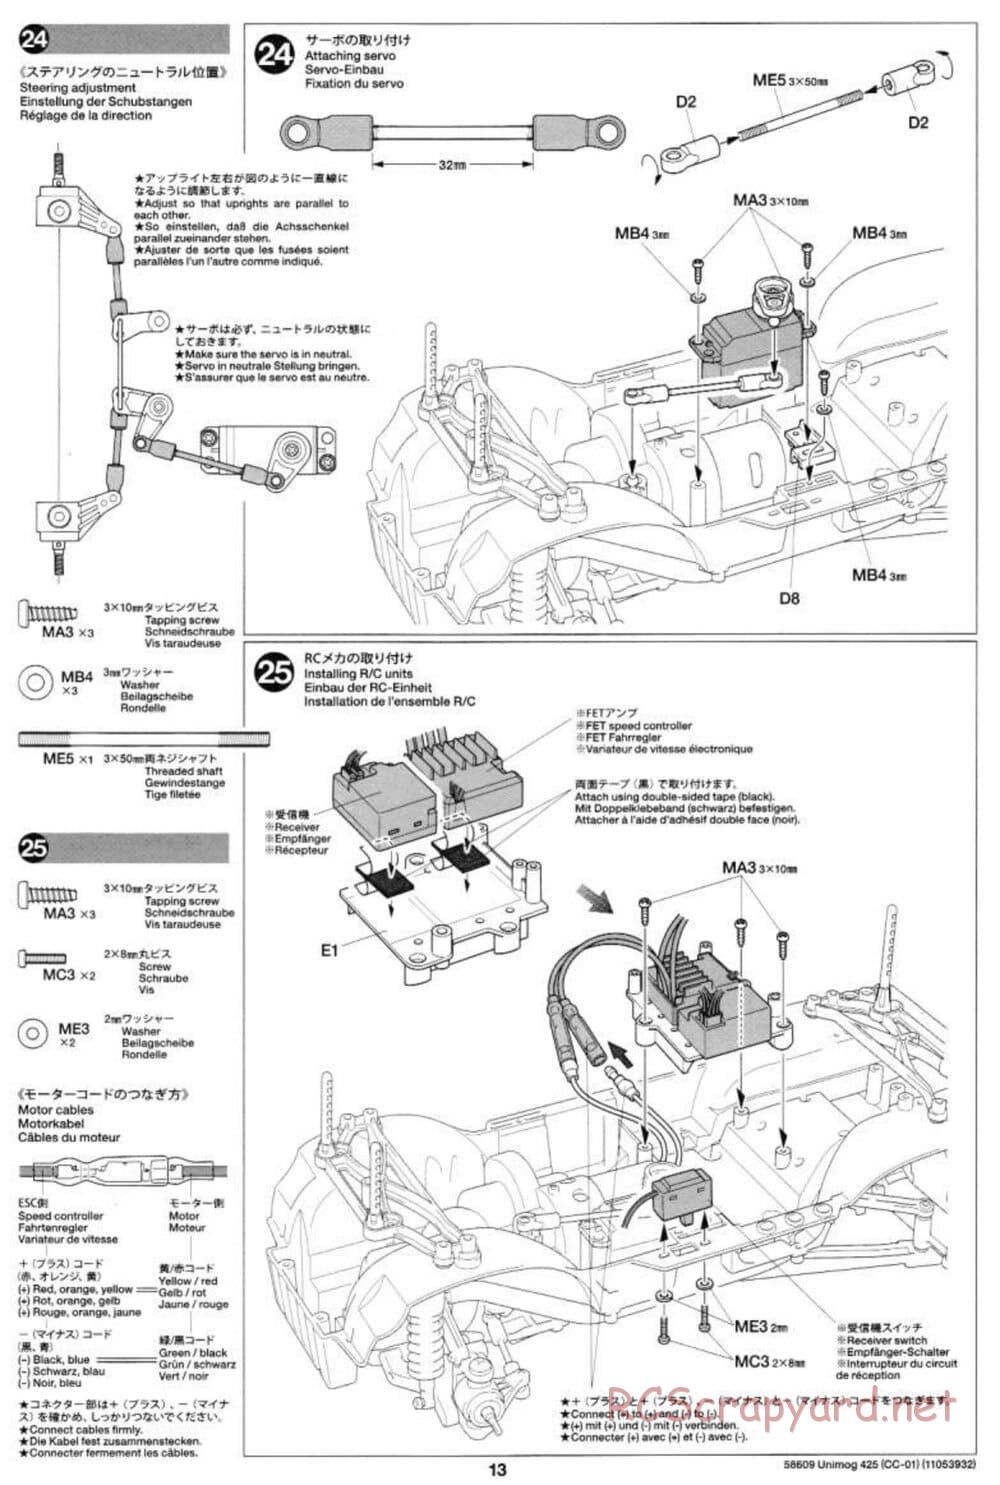 Tamiya - Mercedes-Benz Unimog 425 - CC-01 Chassis - Manual - Page 13